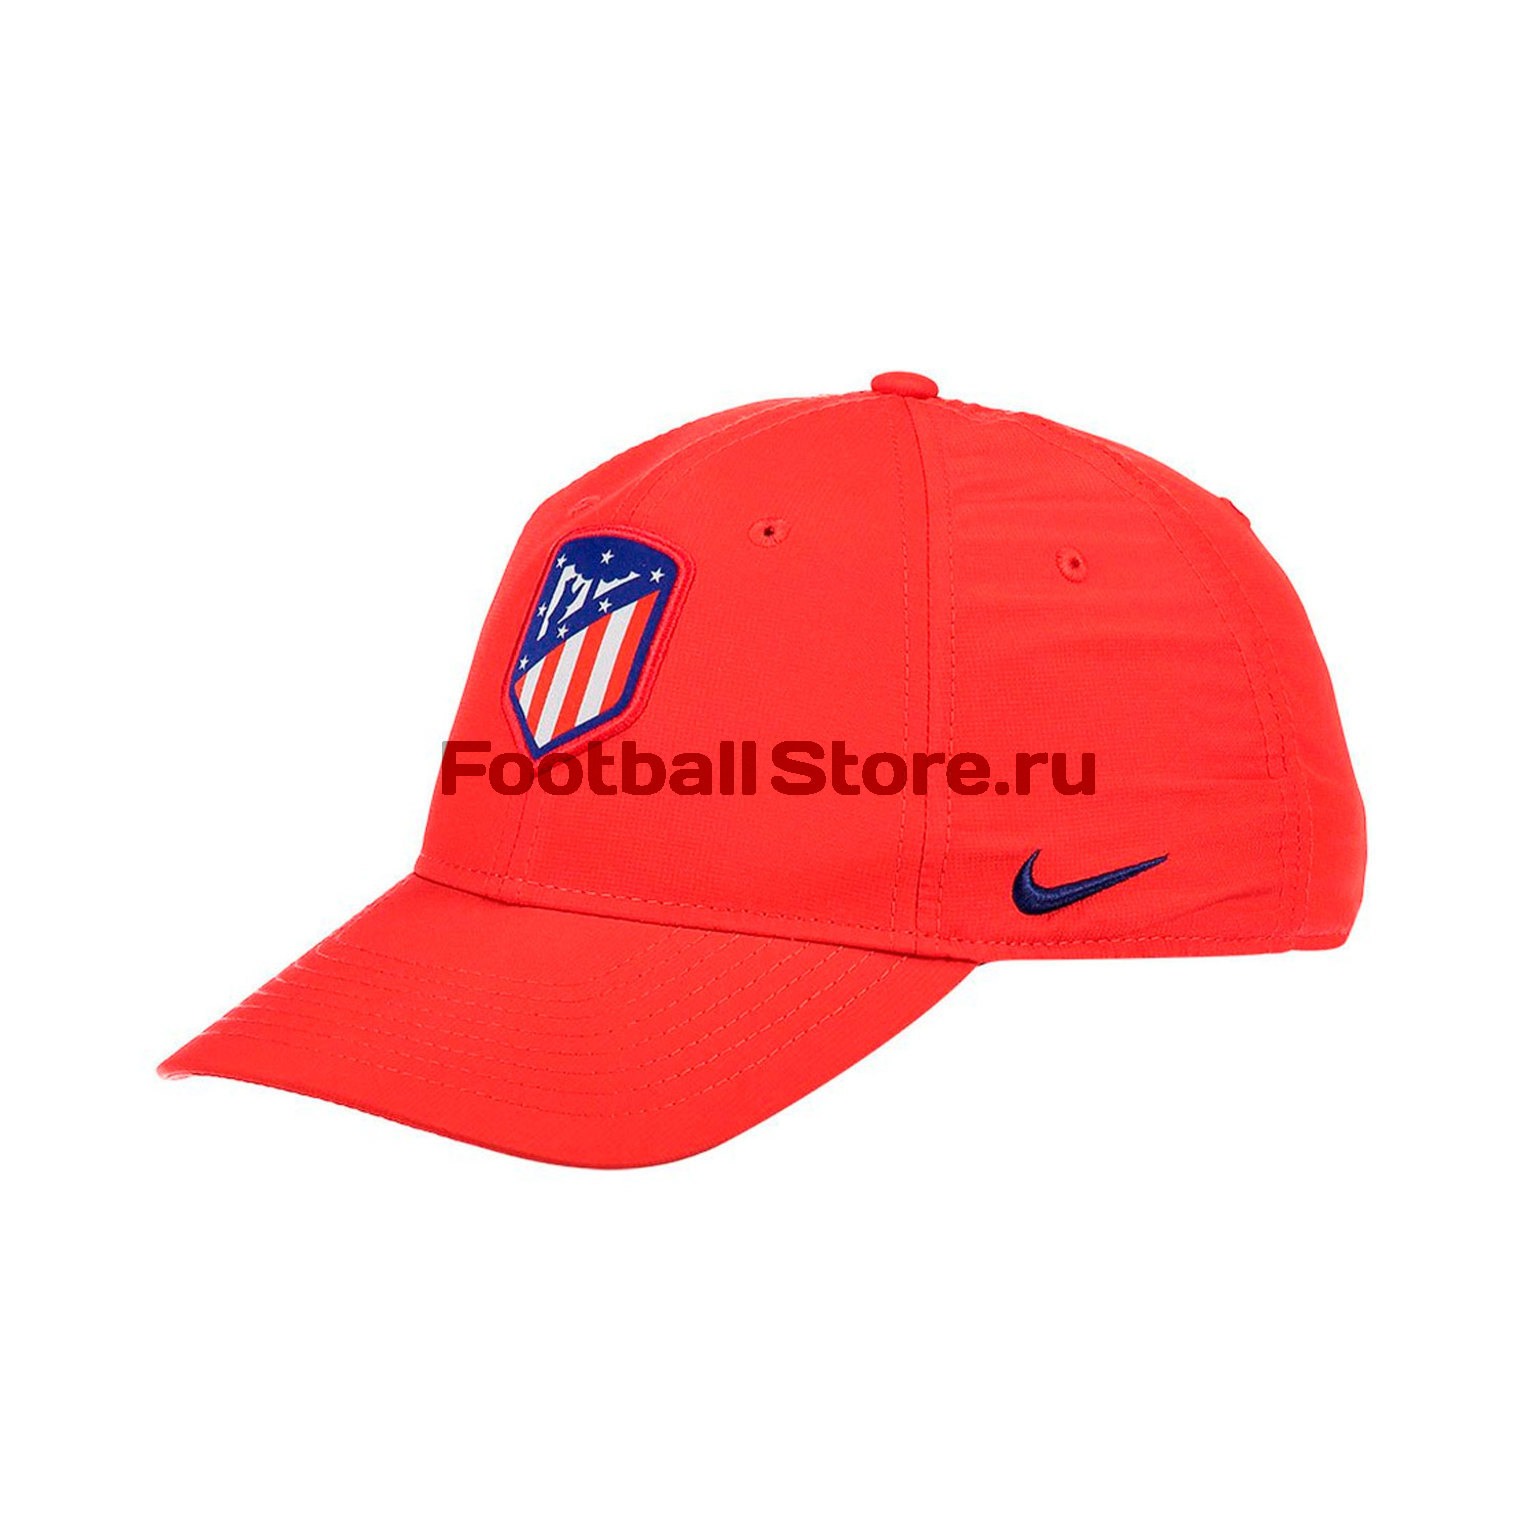 Бейсболка Nike Atletico Madrid Cap BV6414-611